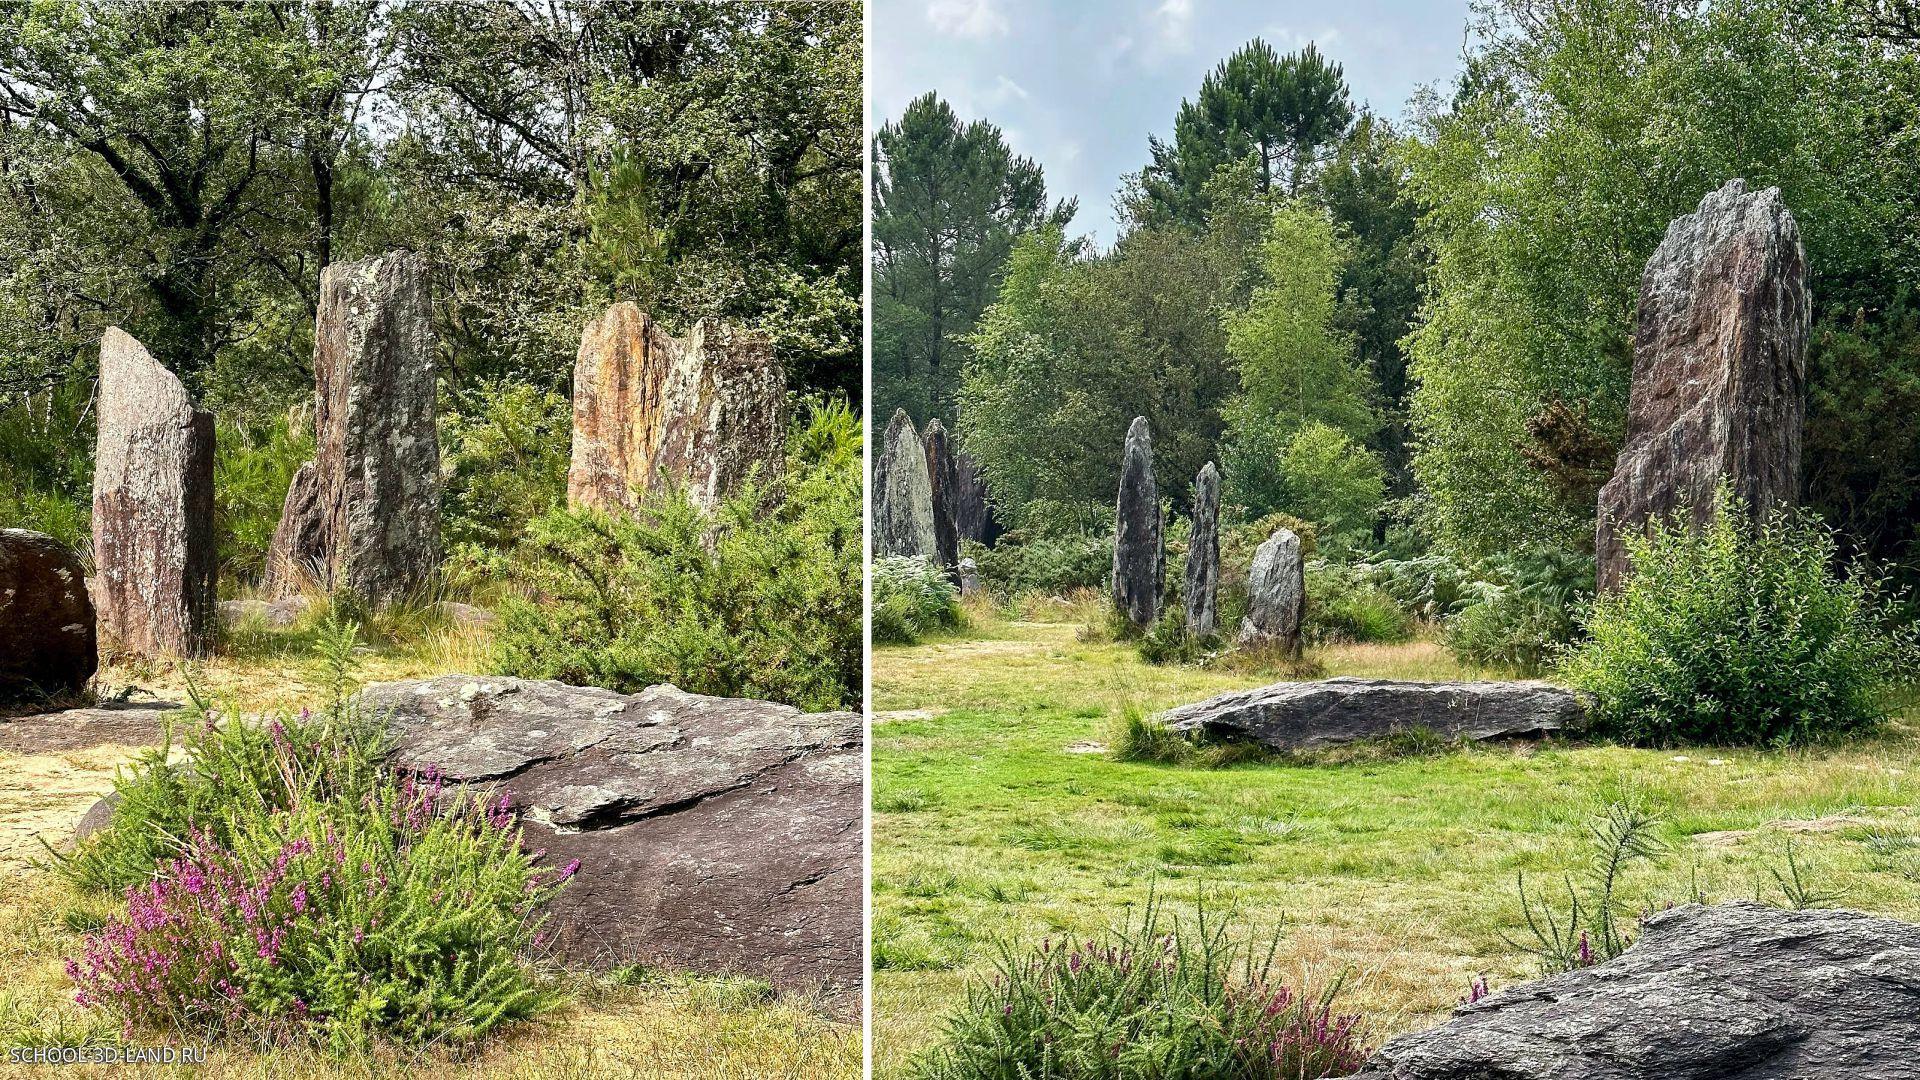 6500 year old rock garden